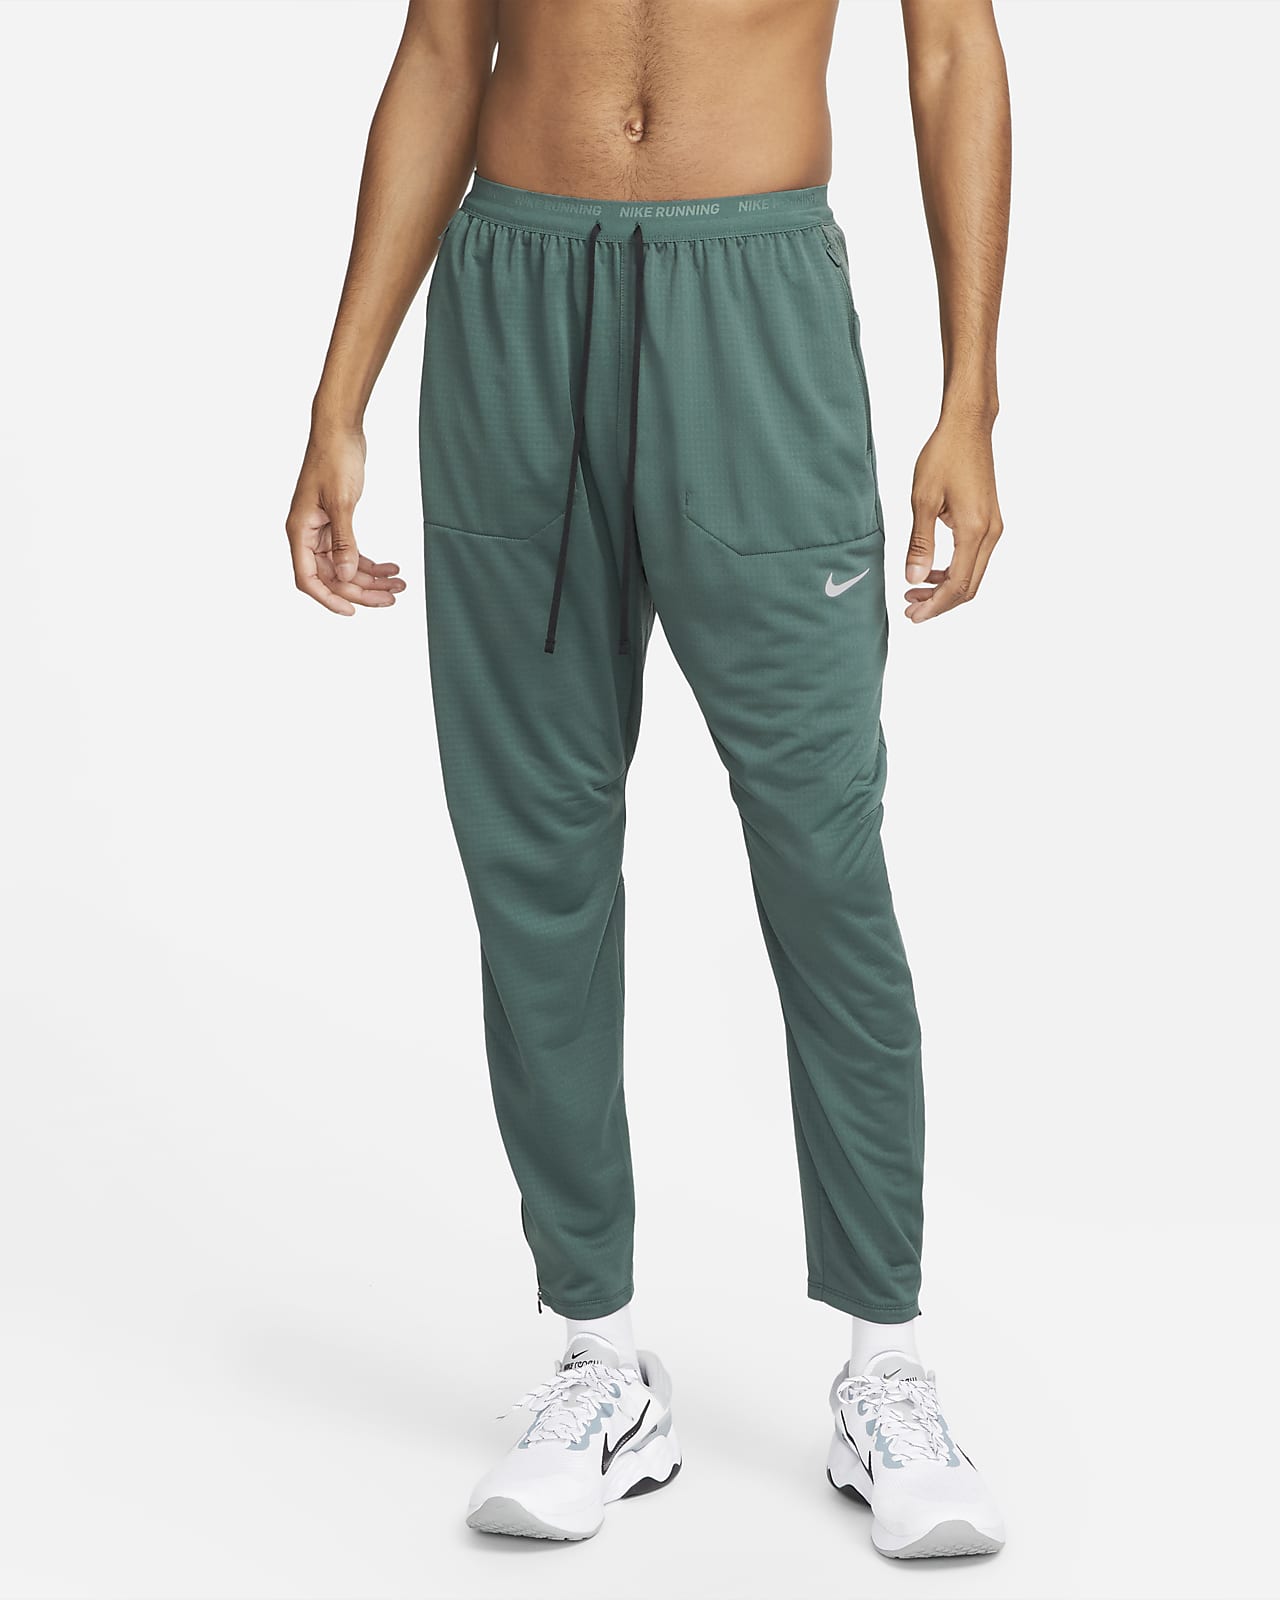 Pants de running tejido Knit Dri-FIT para hombre Nike Phenom. Nike.com